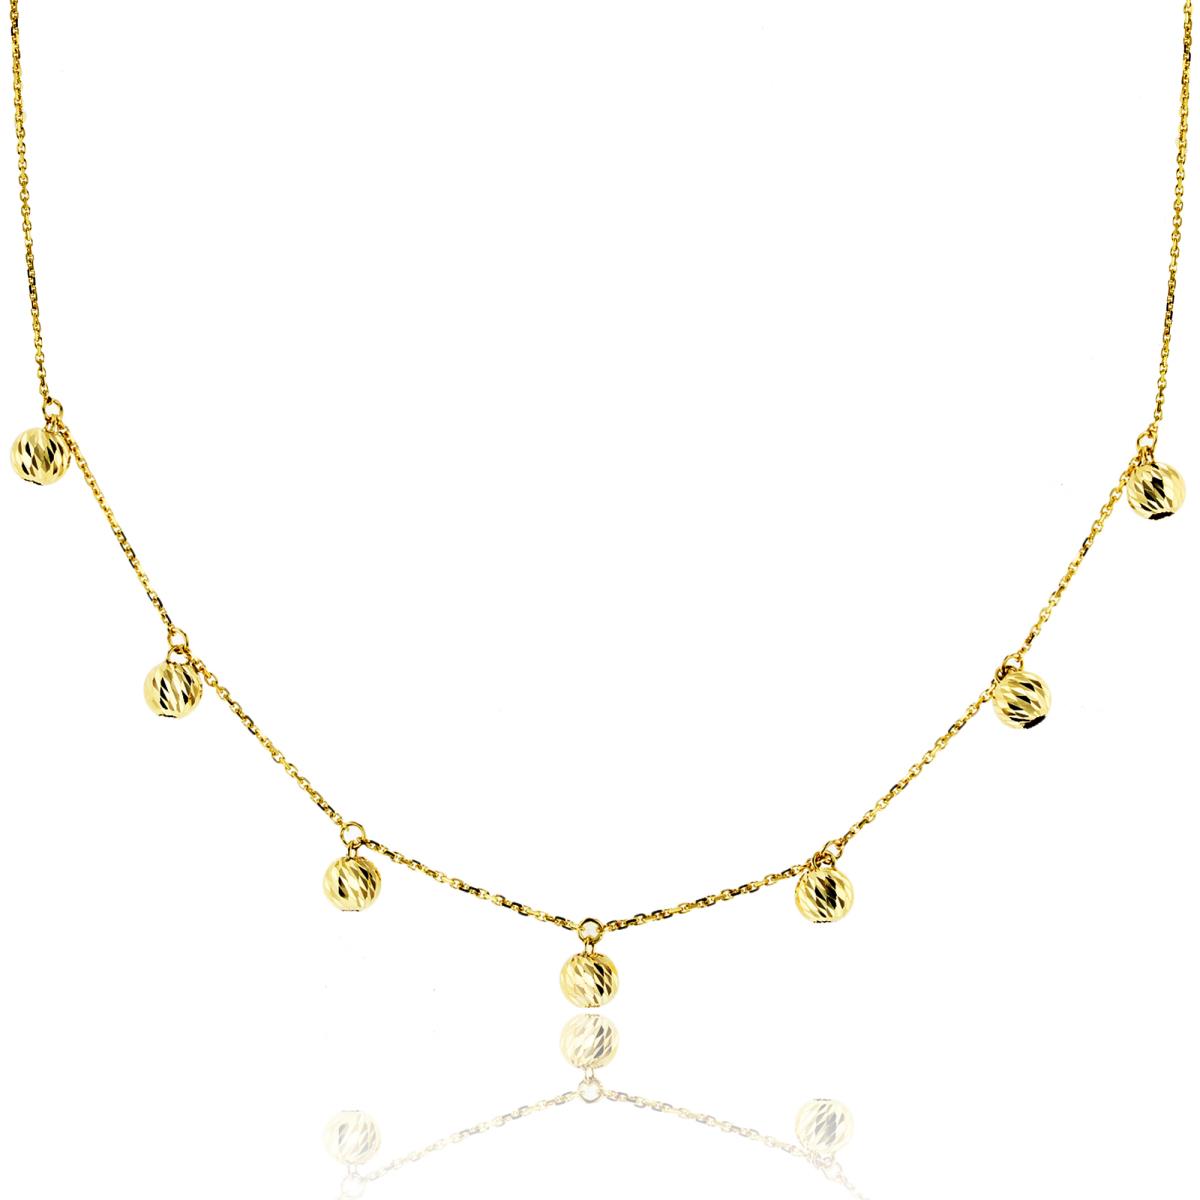 10K Yellow Gold Dangling 5mm Diamond Cut Beads 18" Necklace